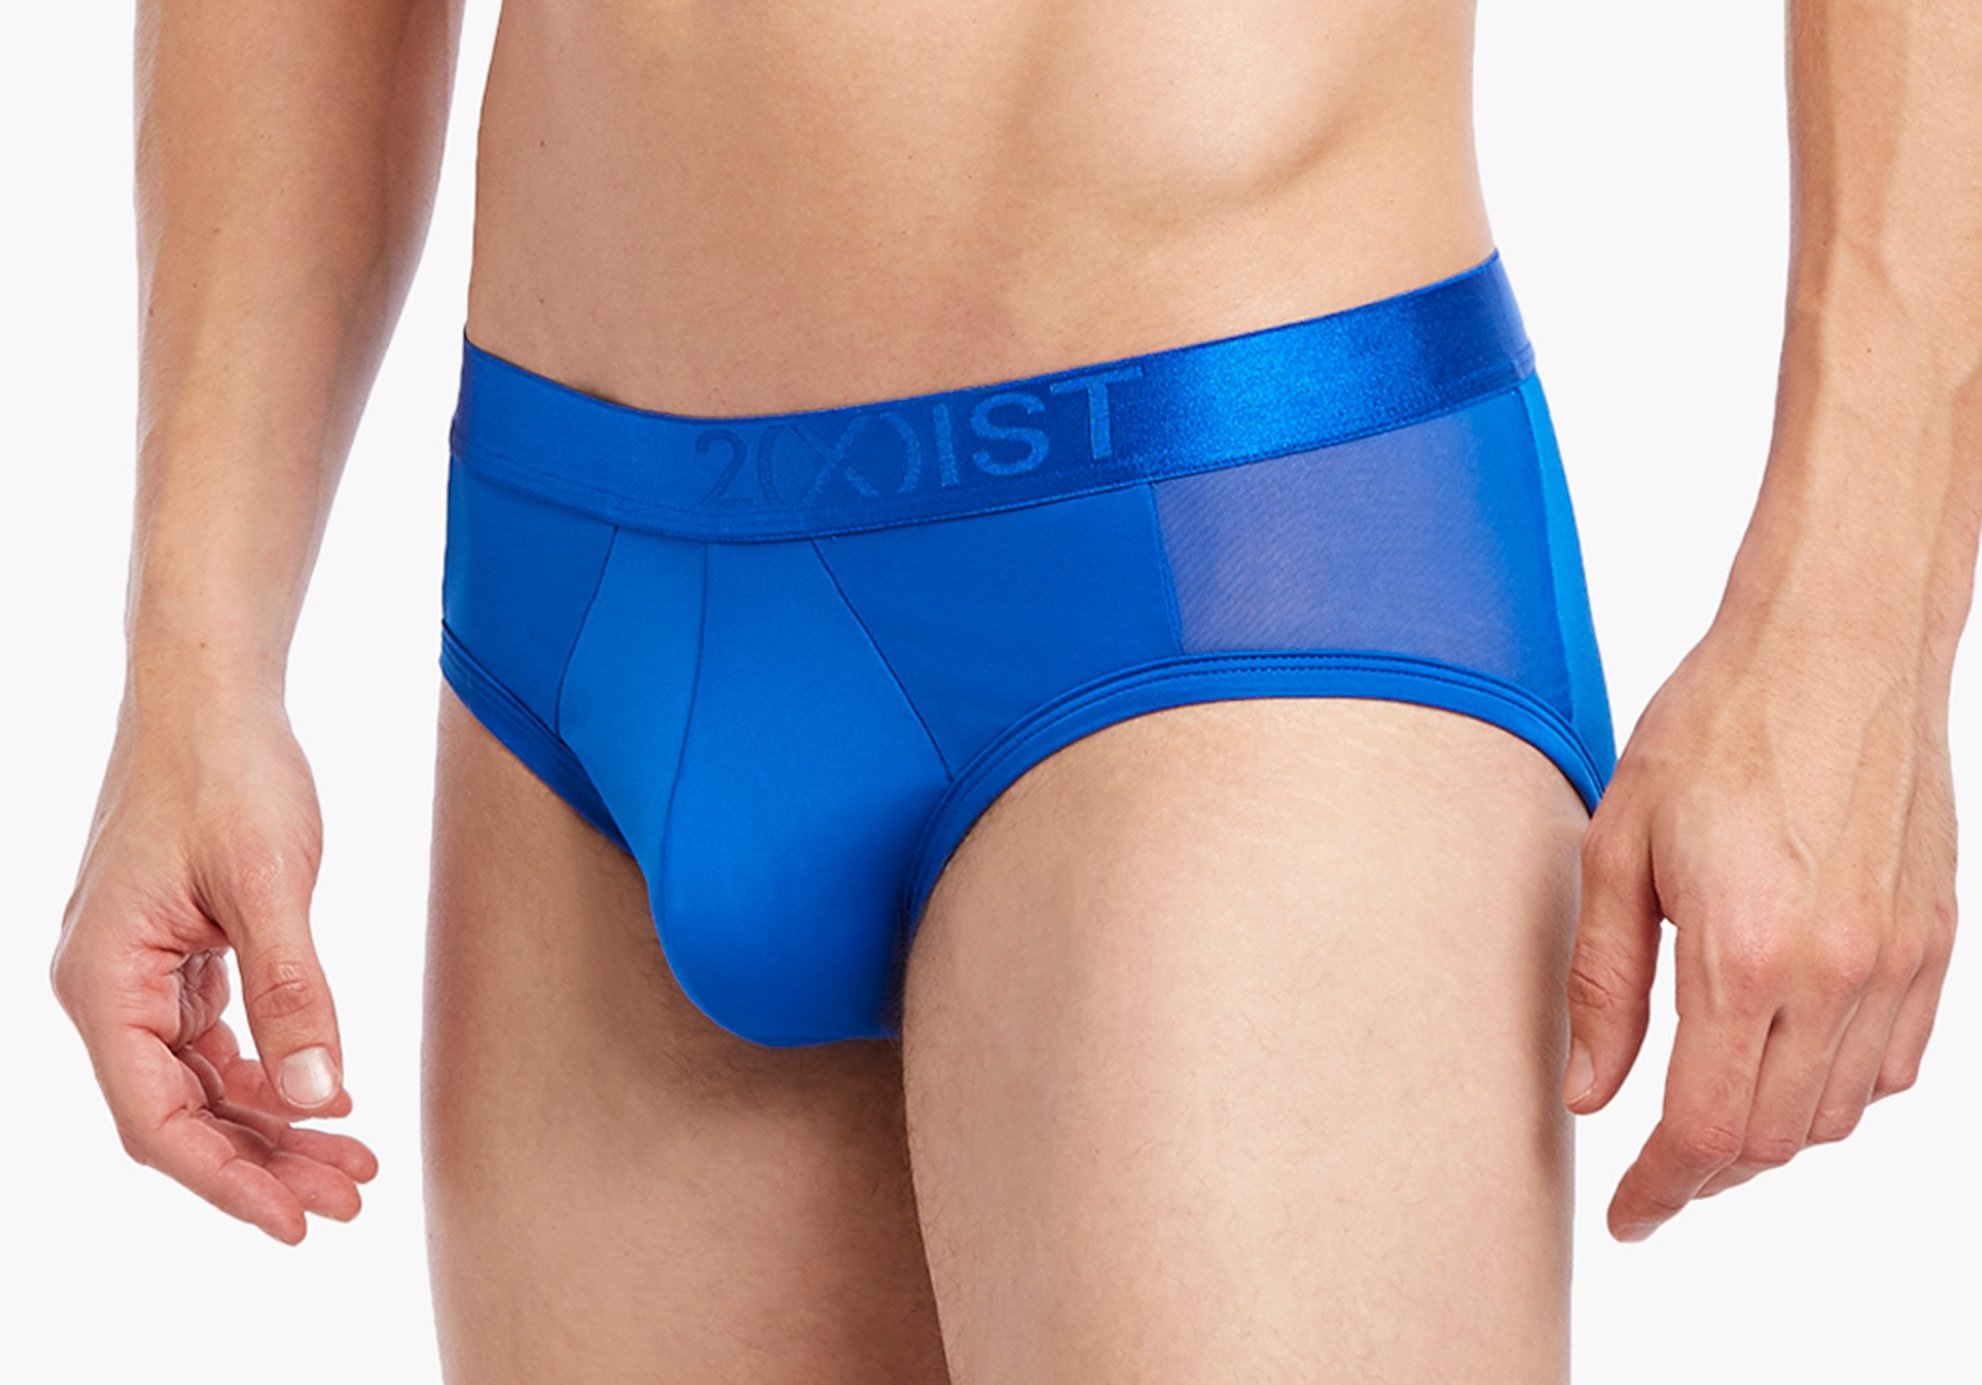 A See on Men's 2xist Underwear